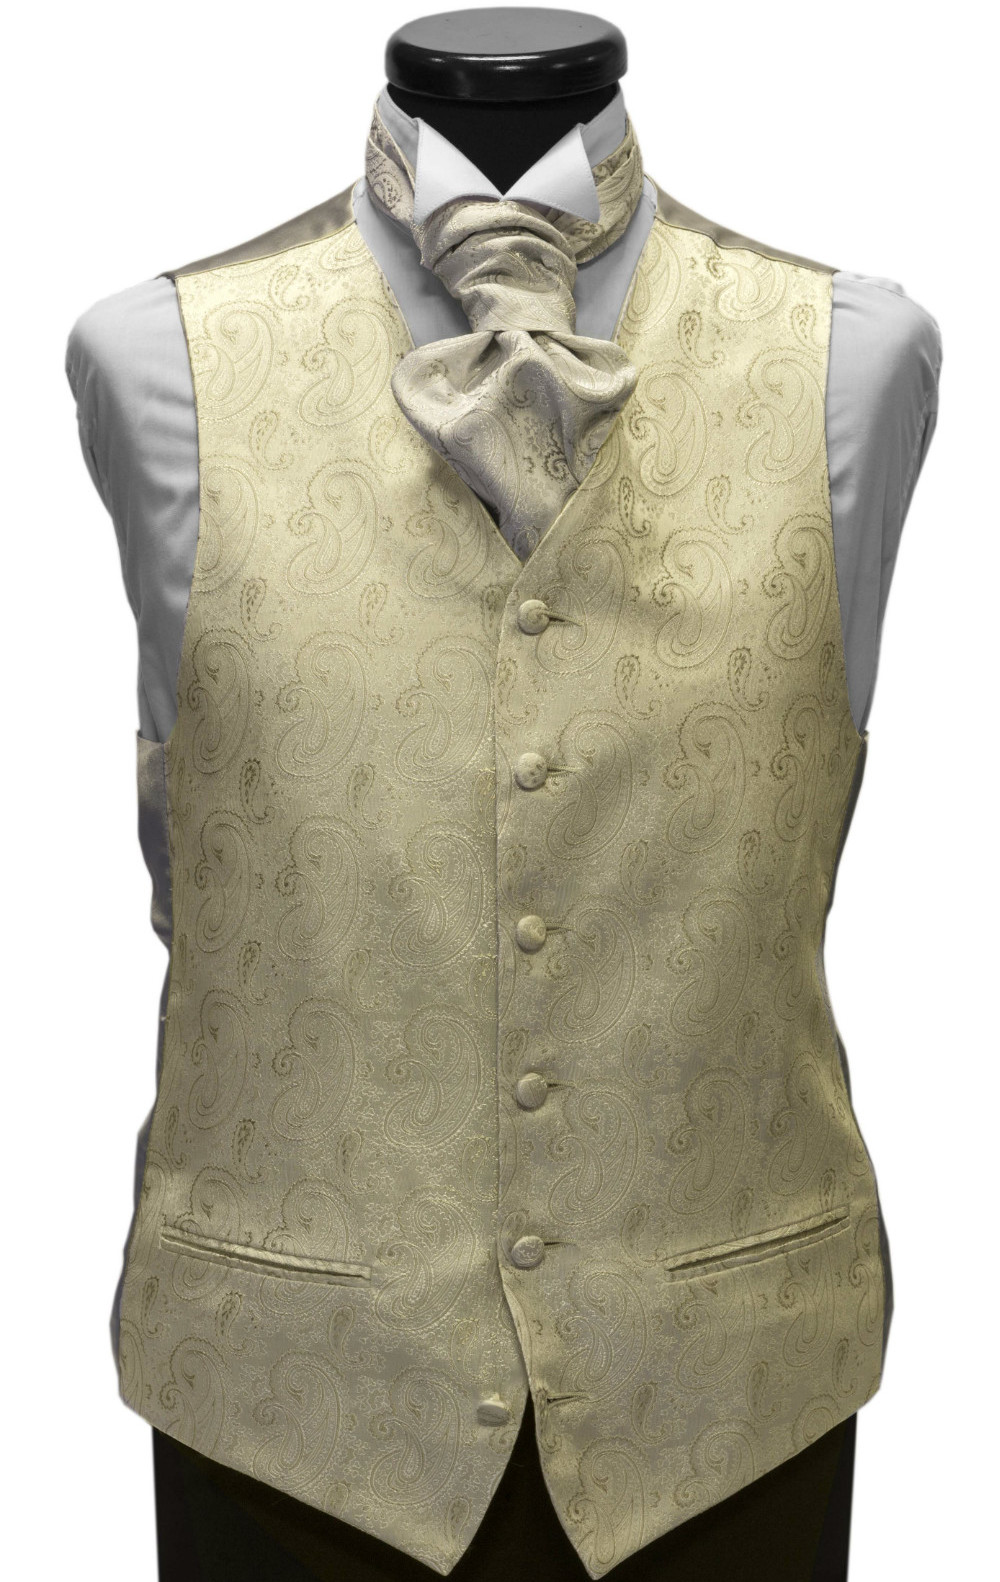 Grey paisley waistcoat with matching cravat